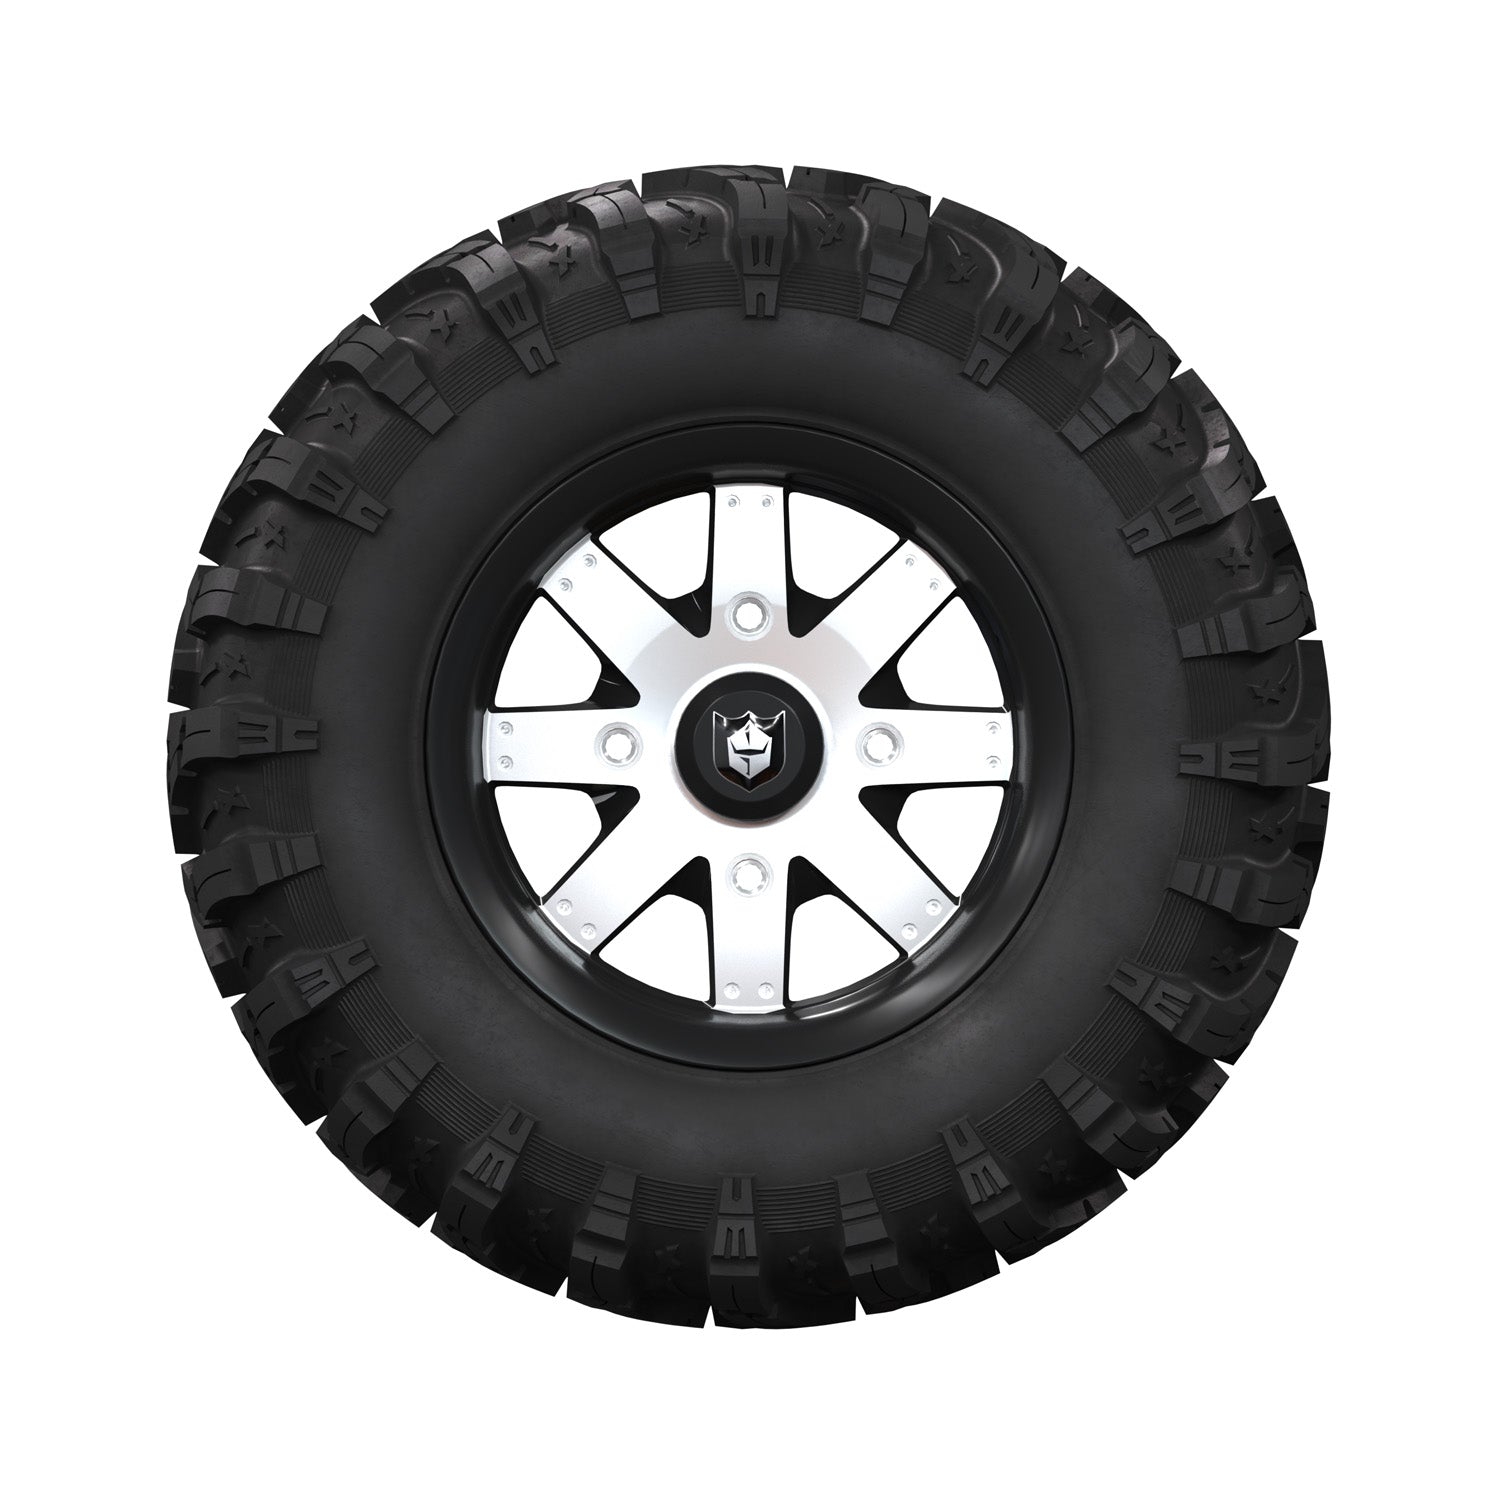 Pro Armor Wheel & Tire Set: 4202 & X Terrain, Matte Black, 29